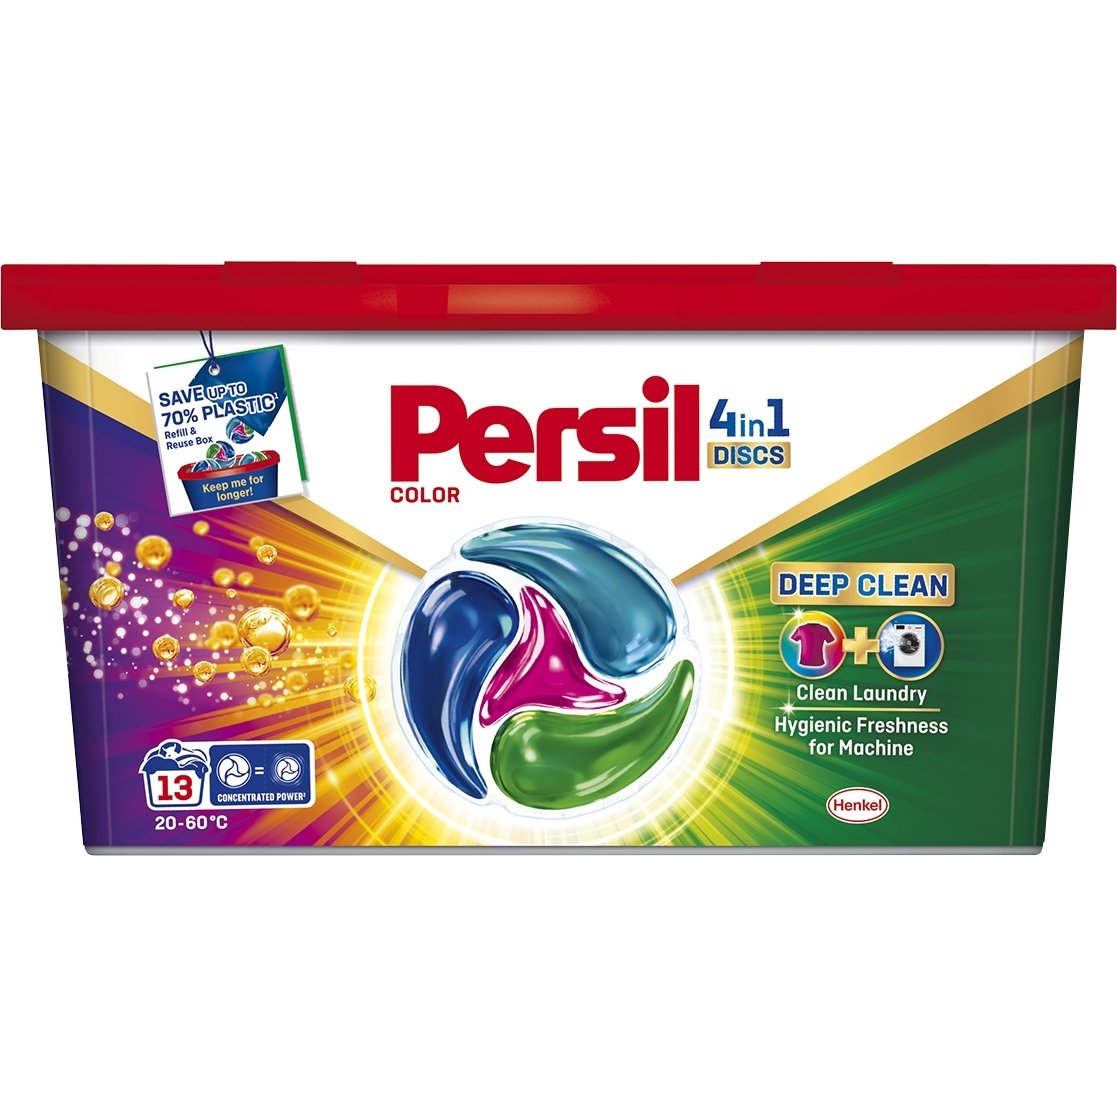 Капсулы Persil Color 4in1 Discs Deep Clean 13 циклов стирки - фото 1